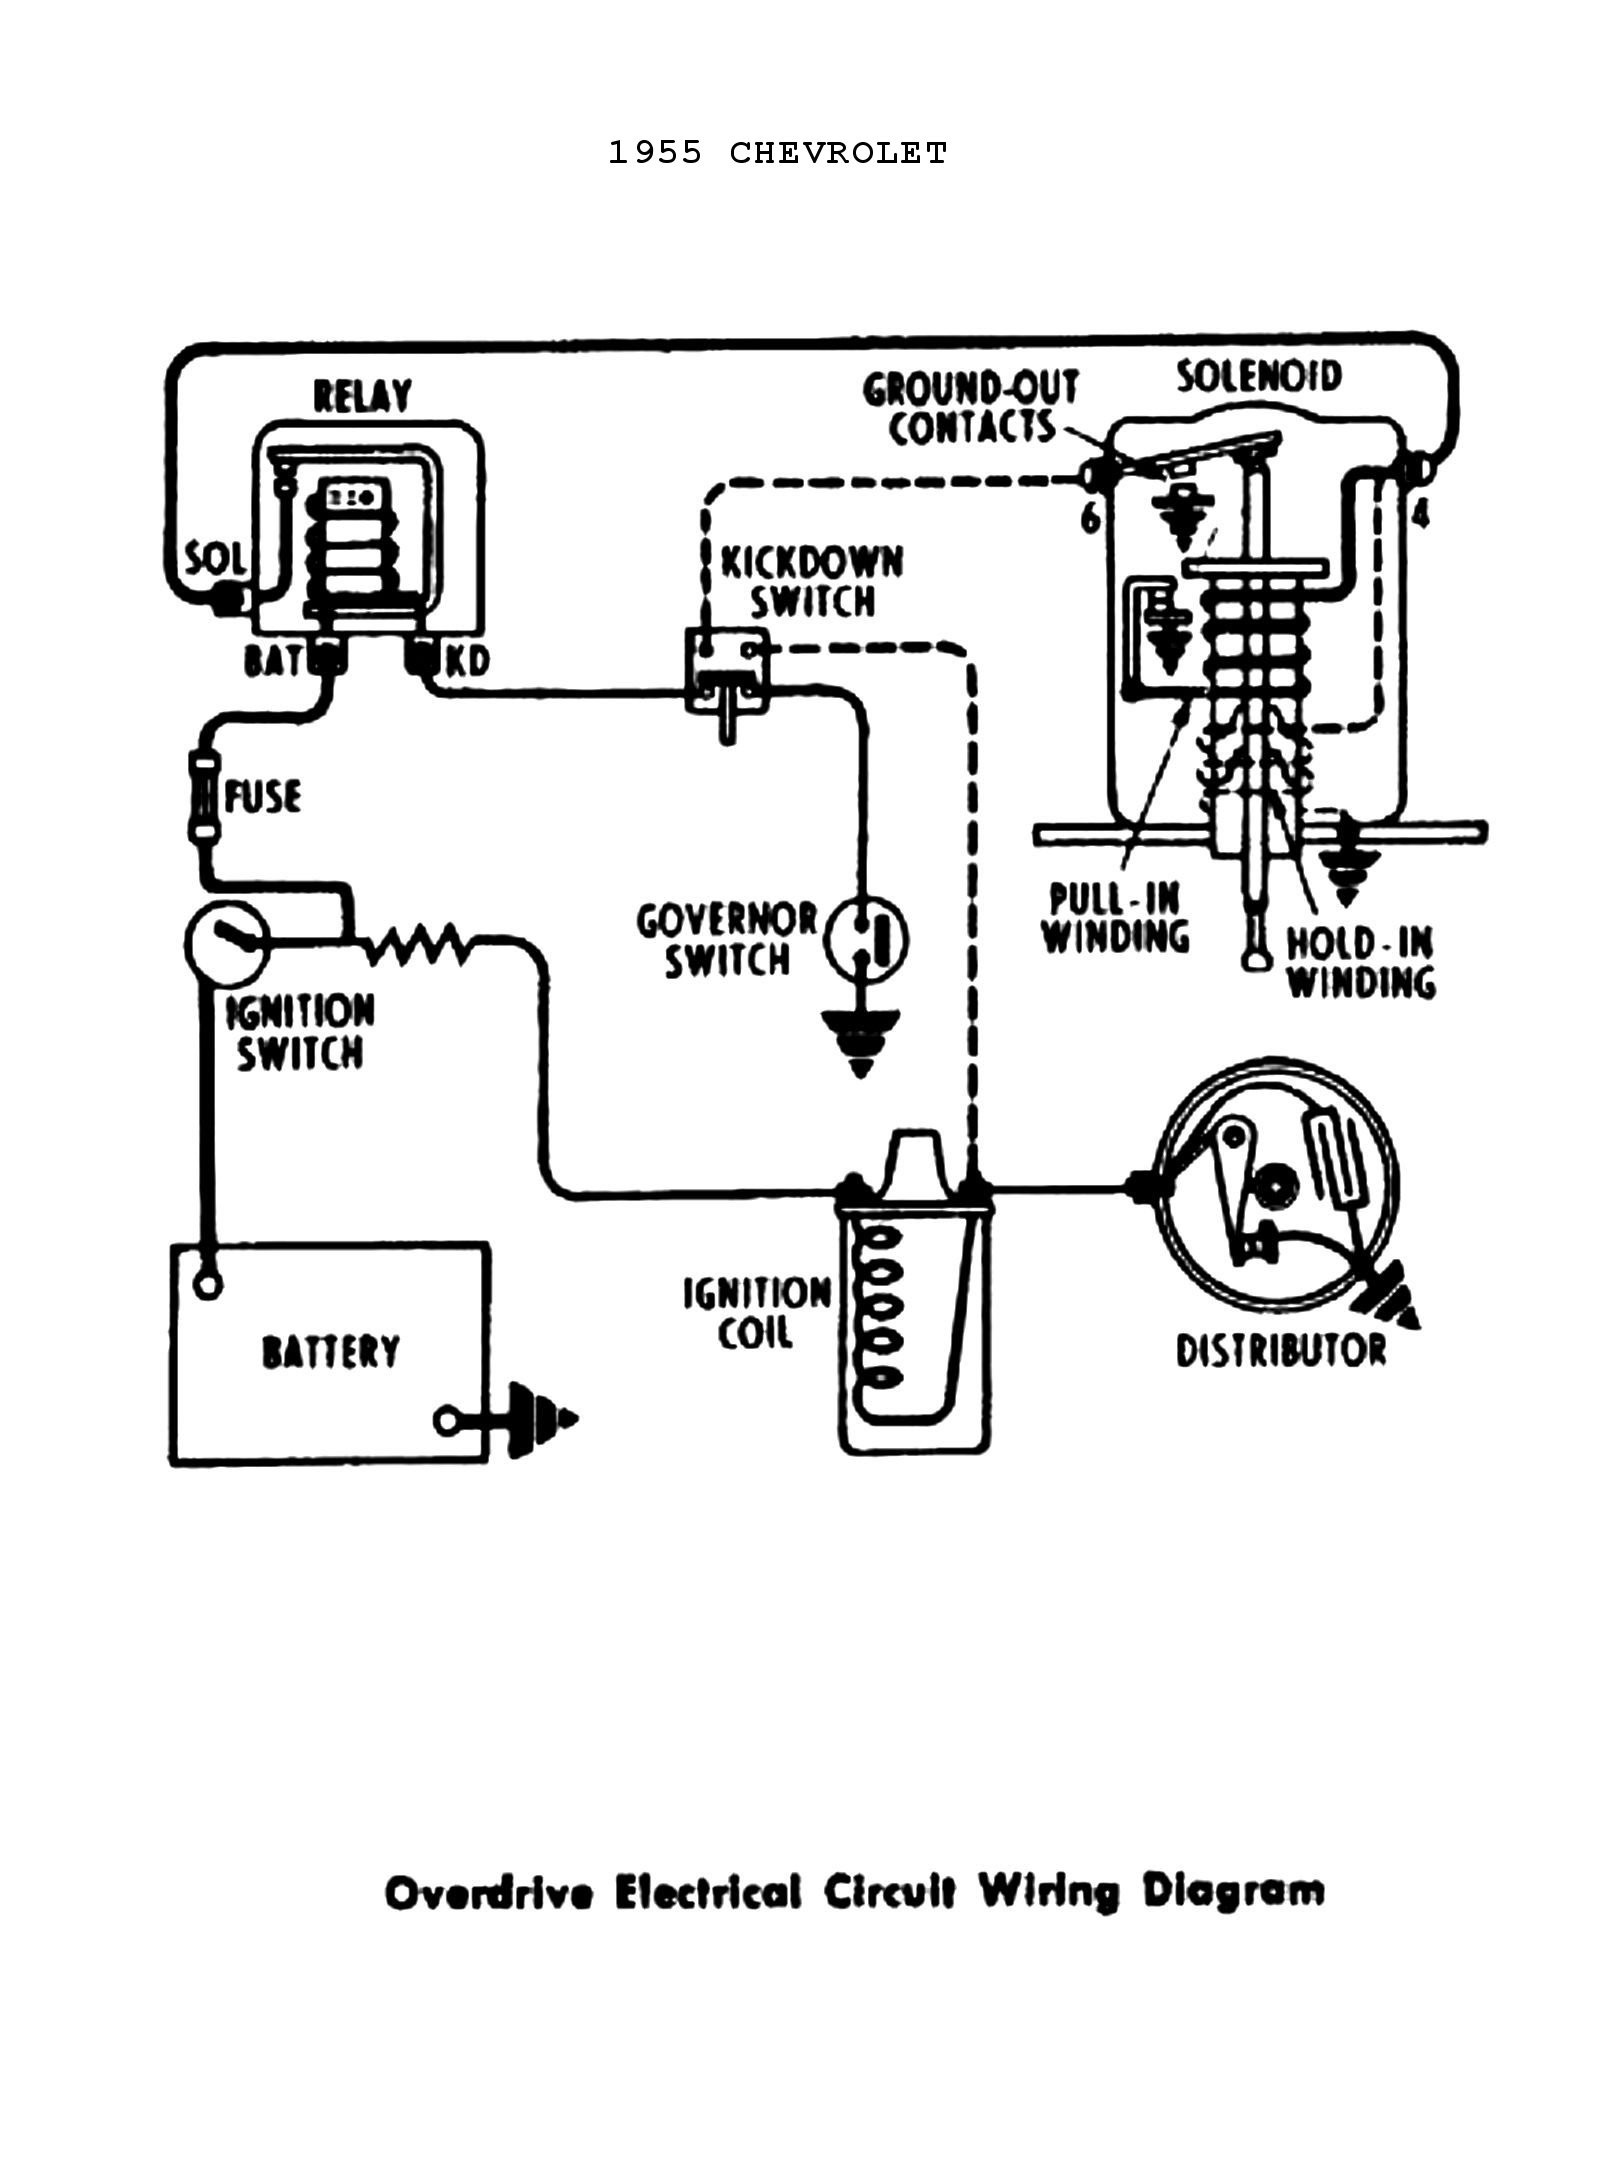 1984 Chevy Truck Wiring Diagram Chevy Wiring Diagrams Of 1984 Chevy Truck Wiring Diagram